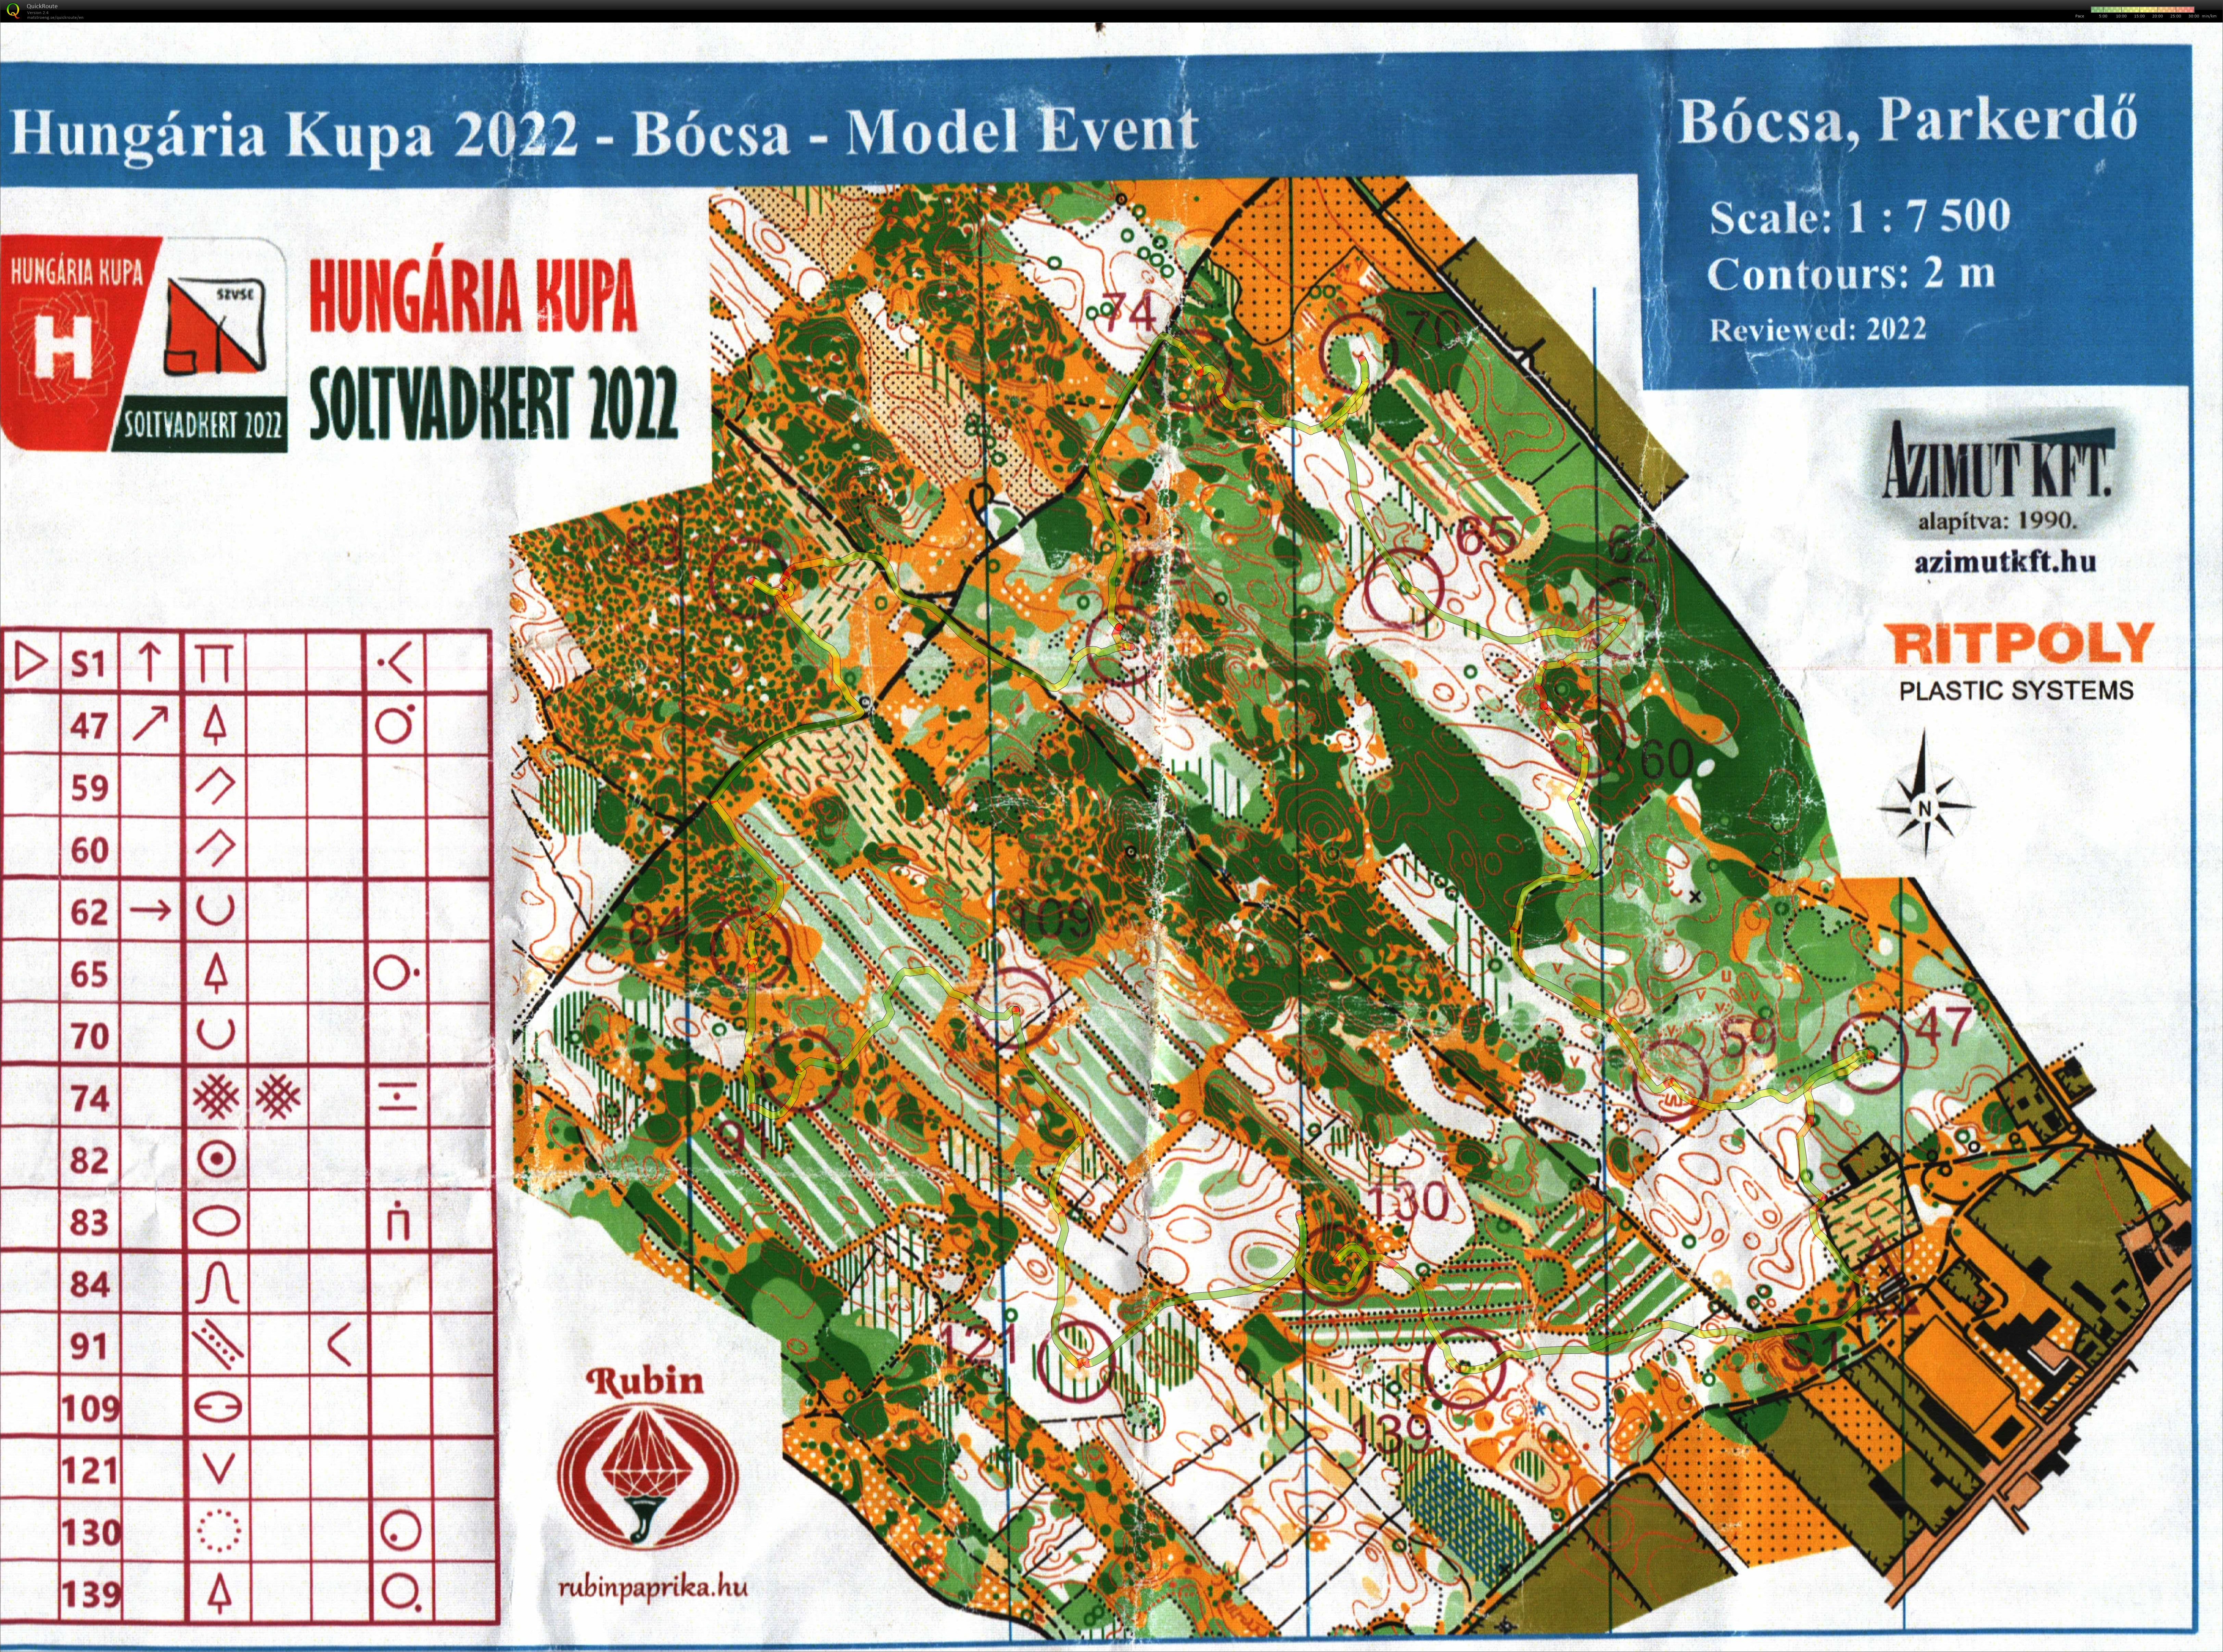 Hungaria Kupa Model Event (09.08.2022)